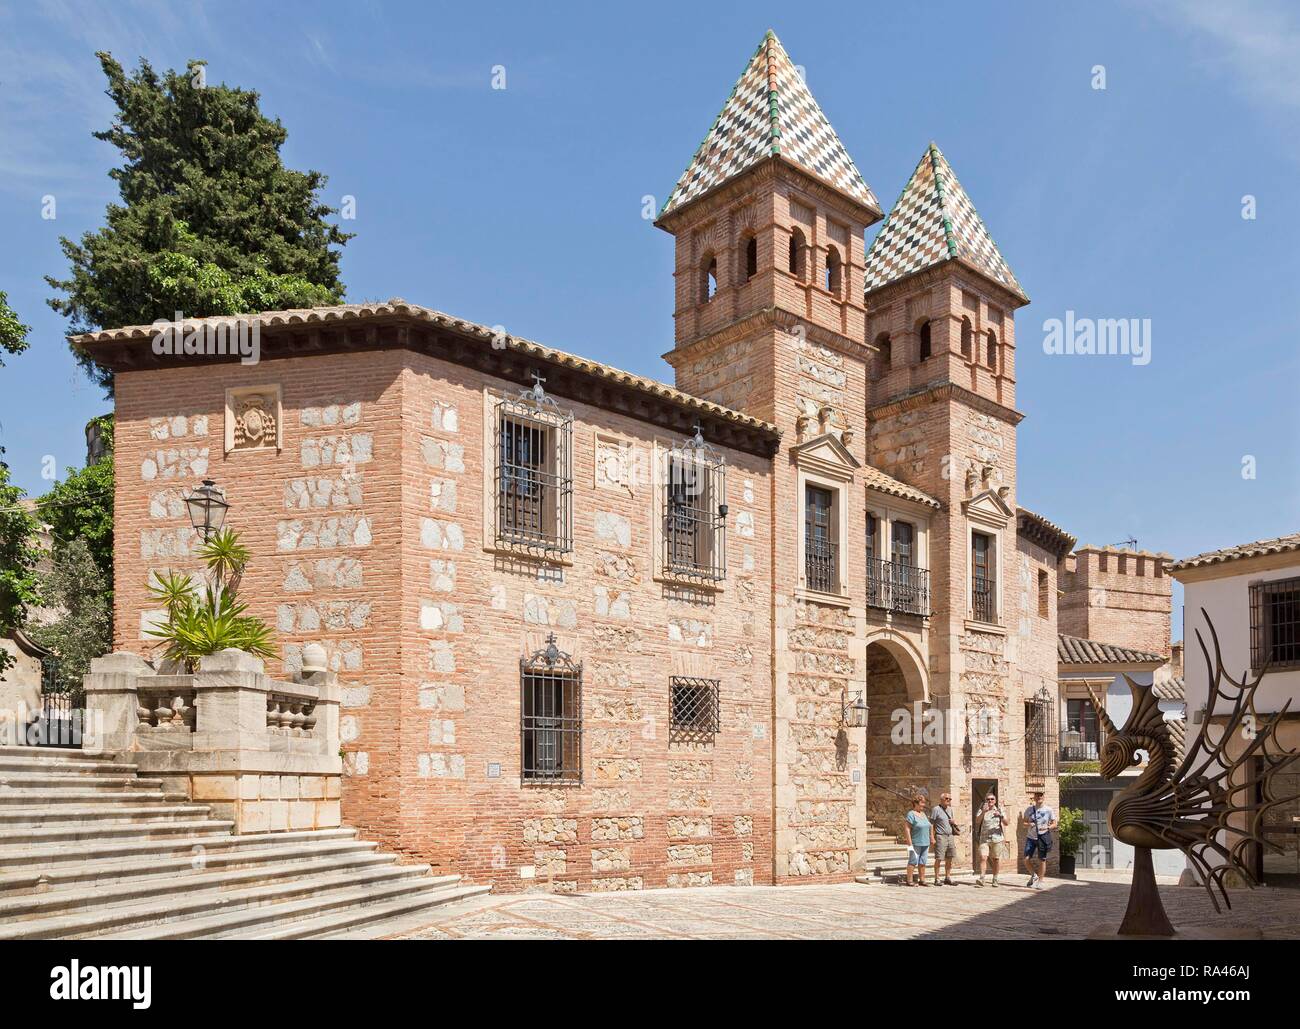 Patio de Carlos V, Poble Espanyol, Palma de Mallorca, Spagna Foto Stock